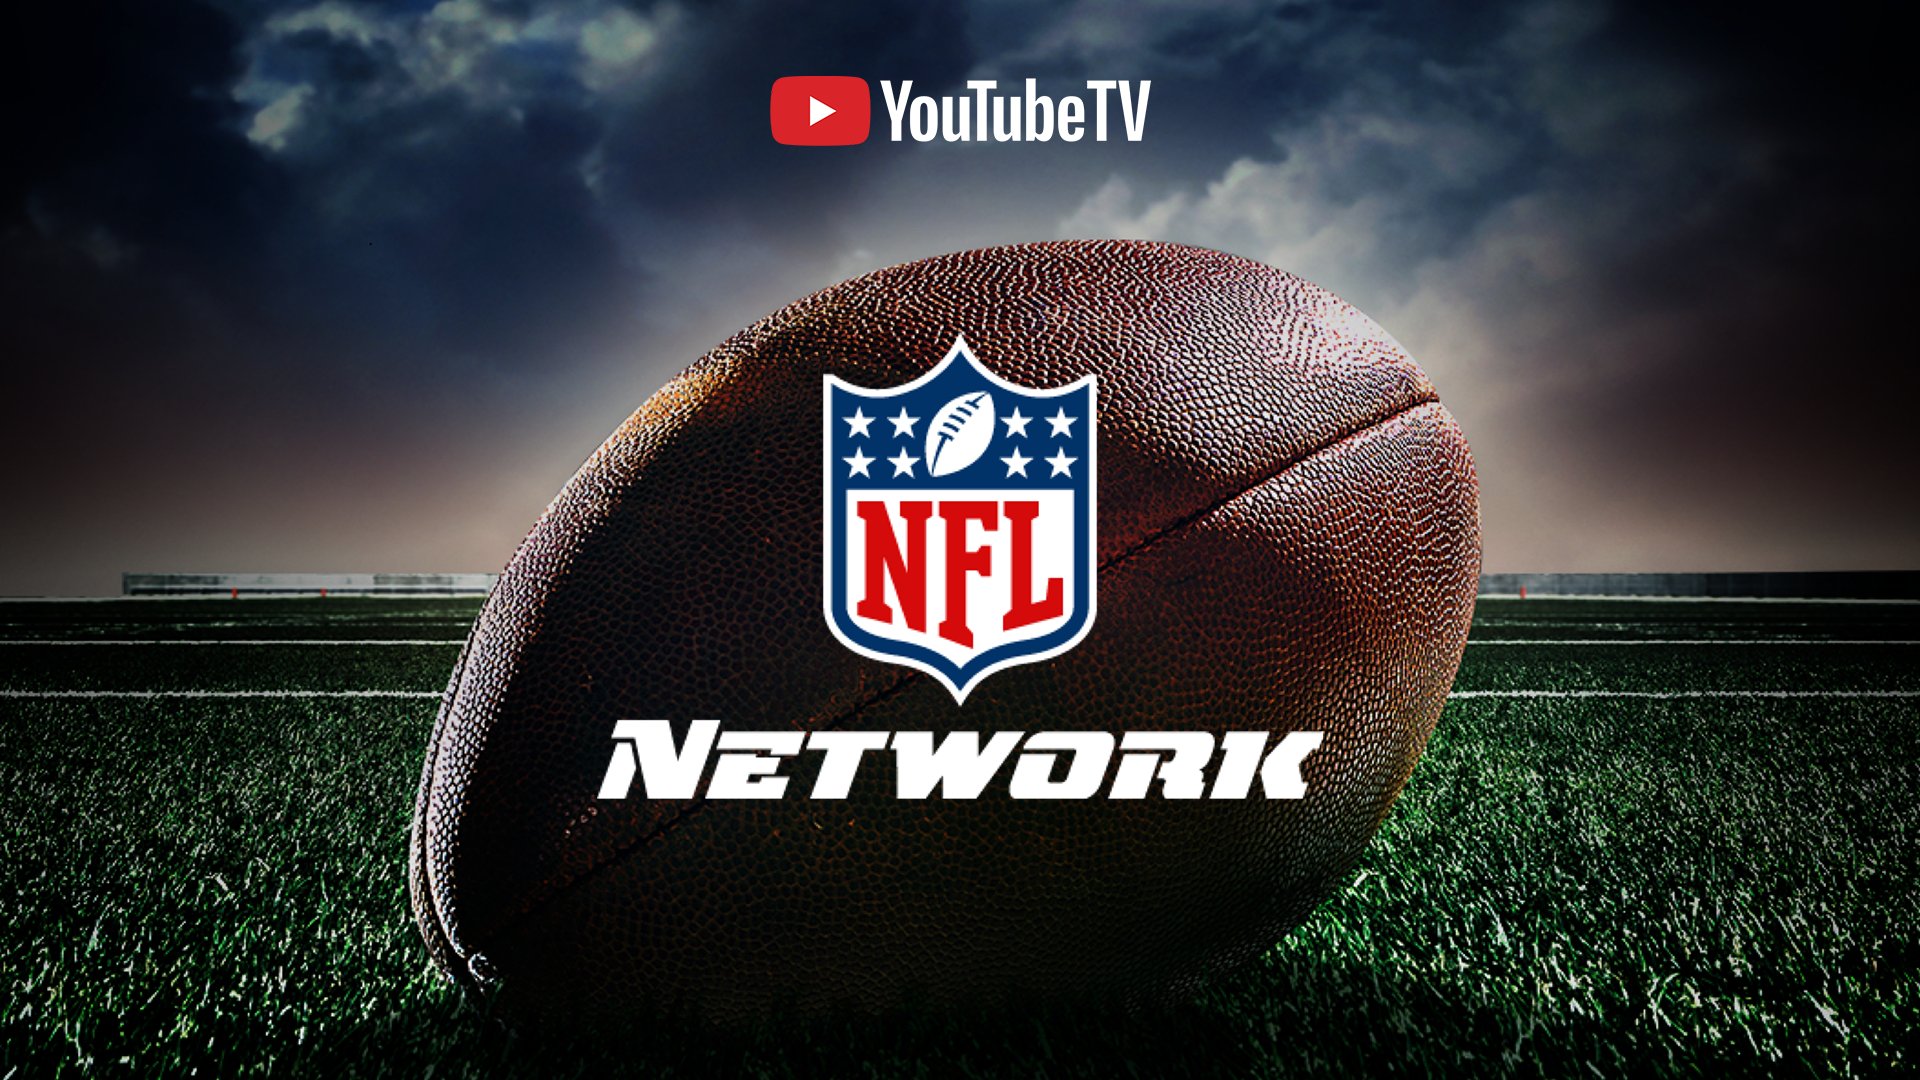 nfl network on youtube tv